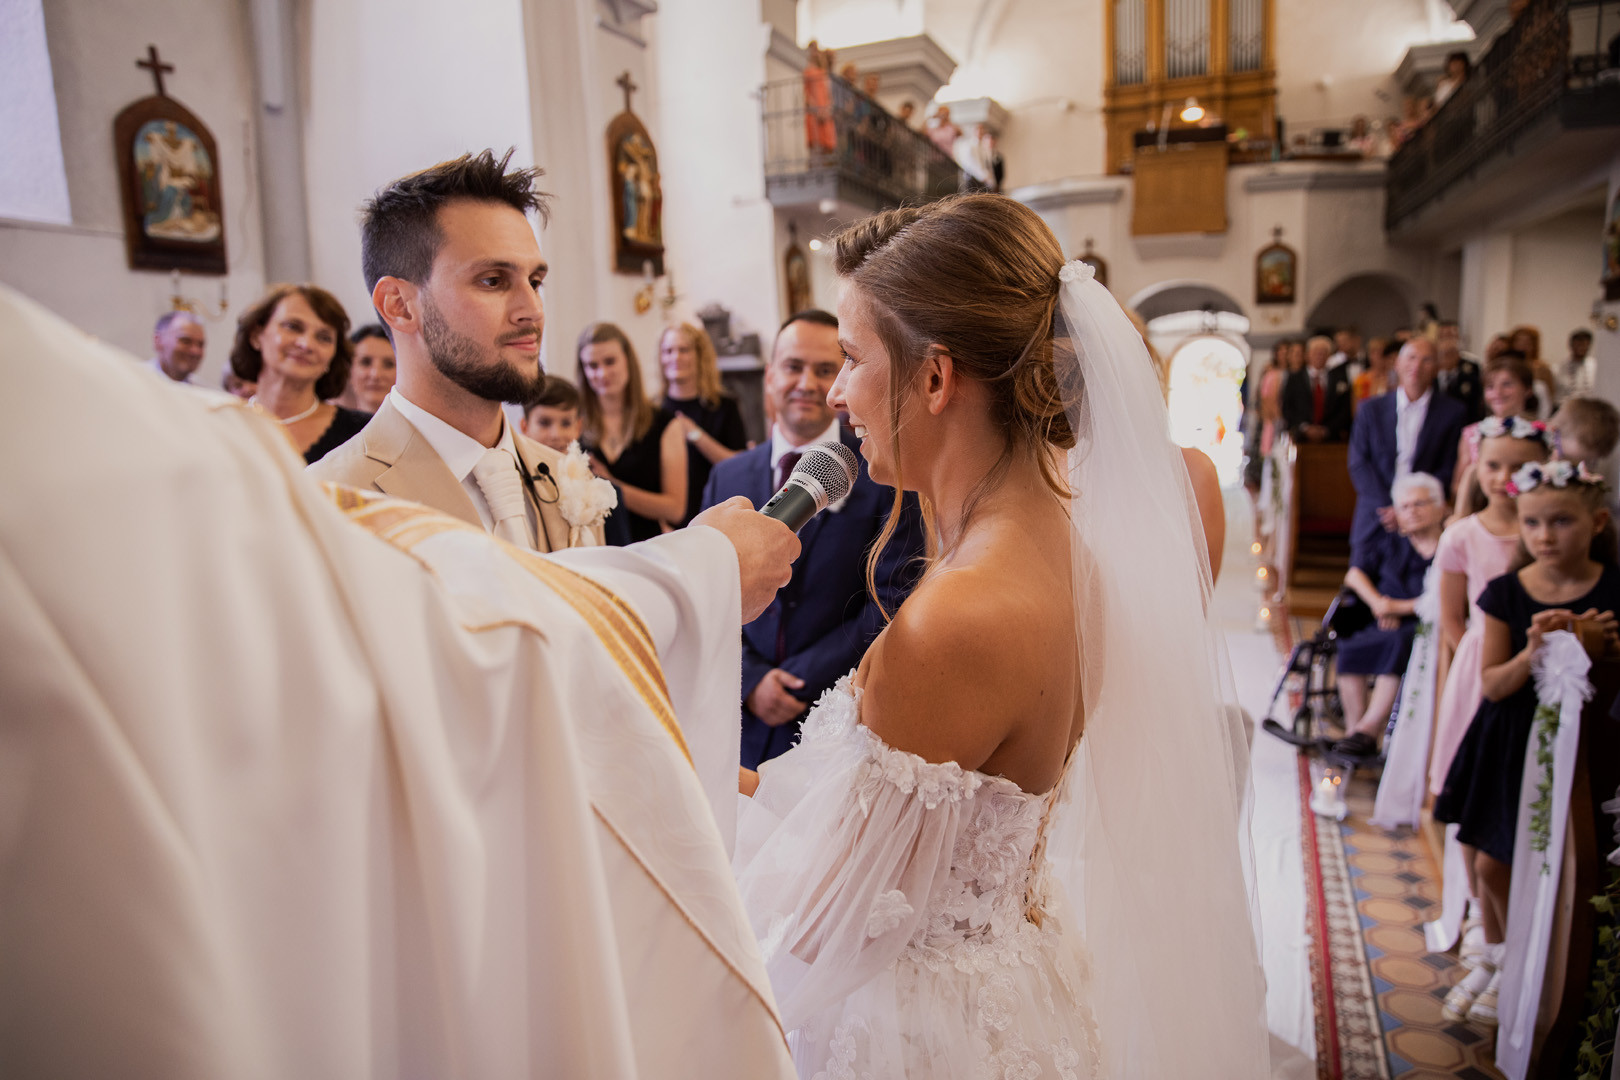 The beautiful wedding of Zuzka and Matúš - 0274.jpg